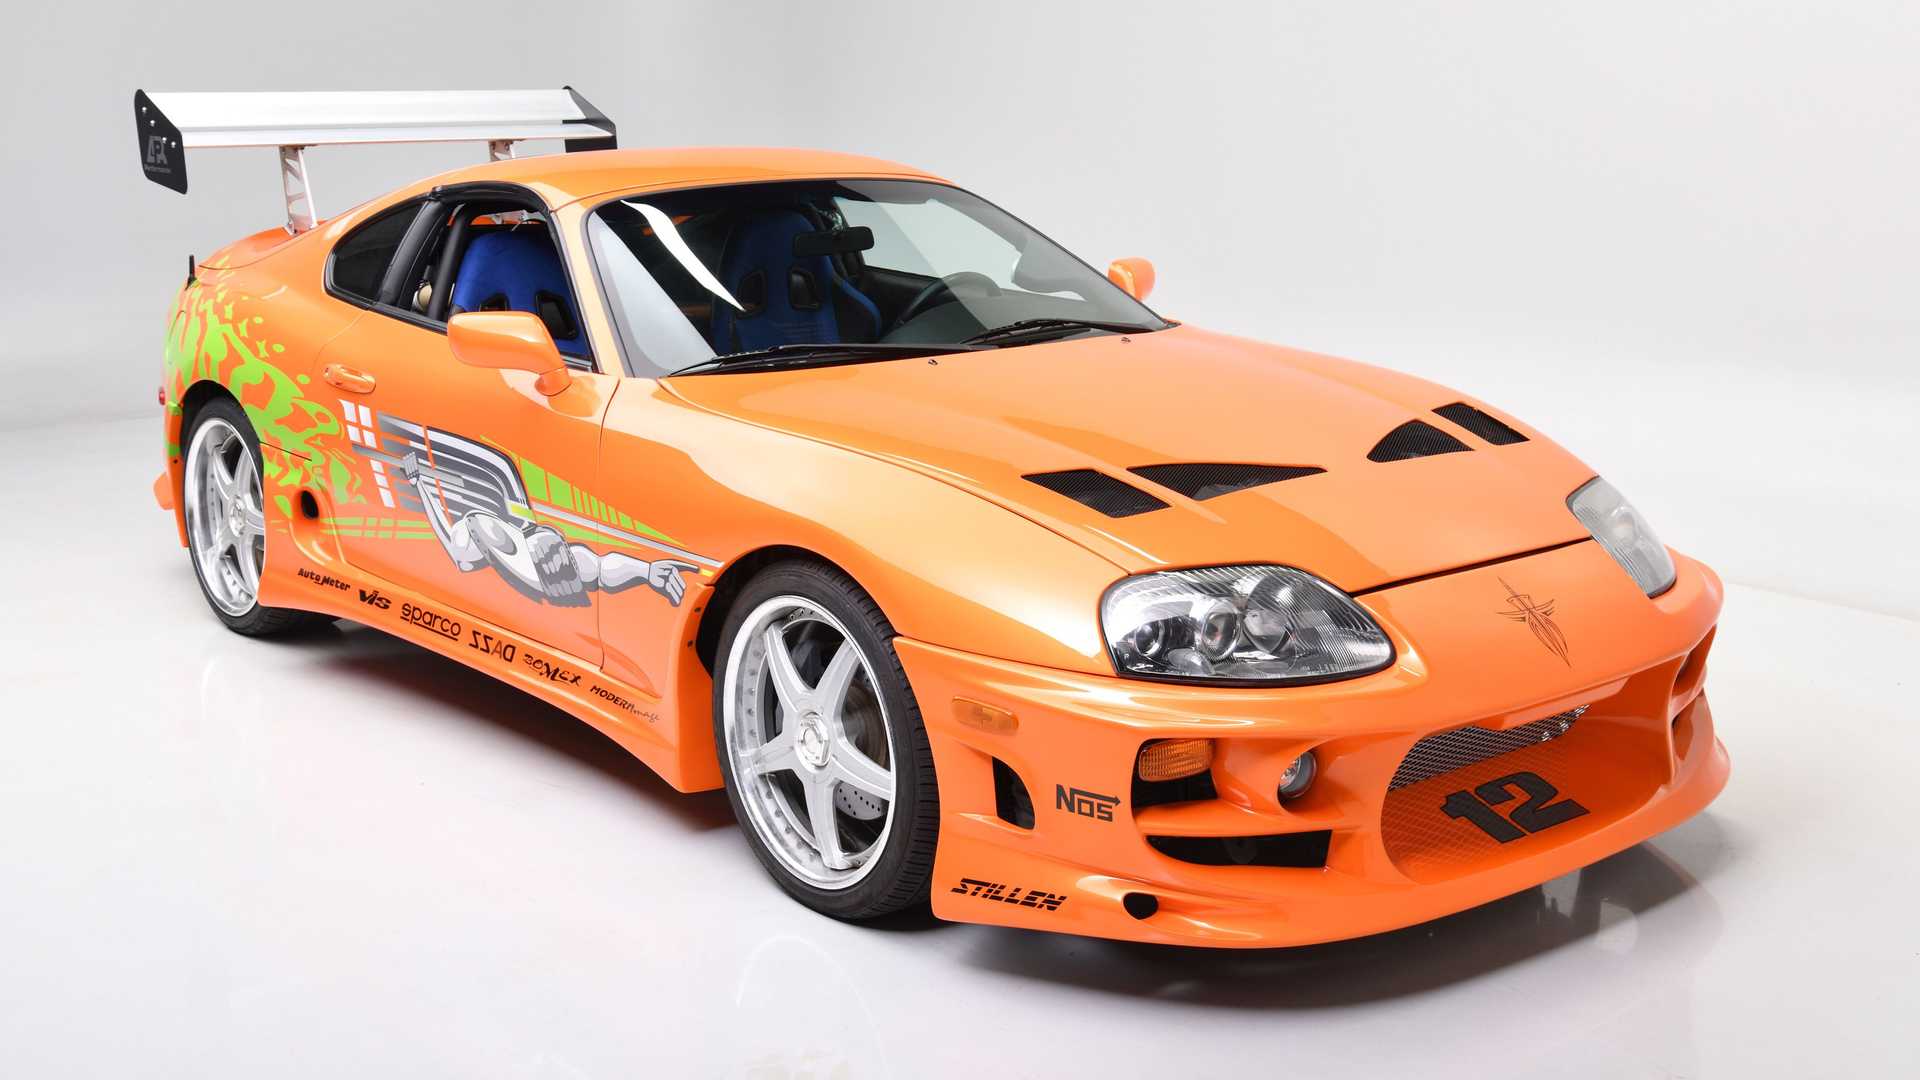 نمای جلو تویوتا سوپرا فیلم سریع و خشن / Fast & Furious Toyota Supra نارنجی رنگ